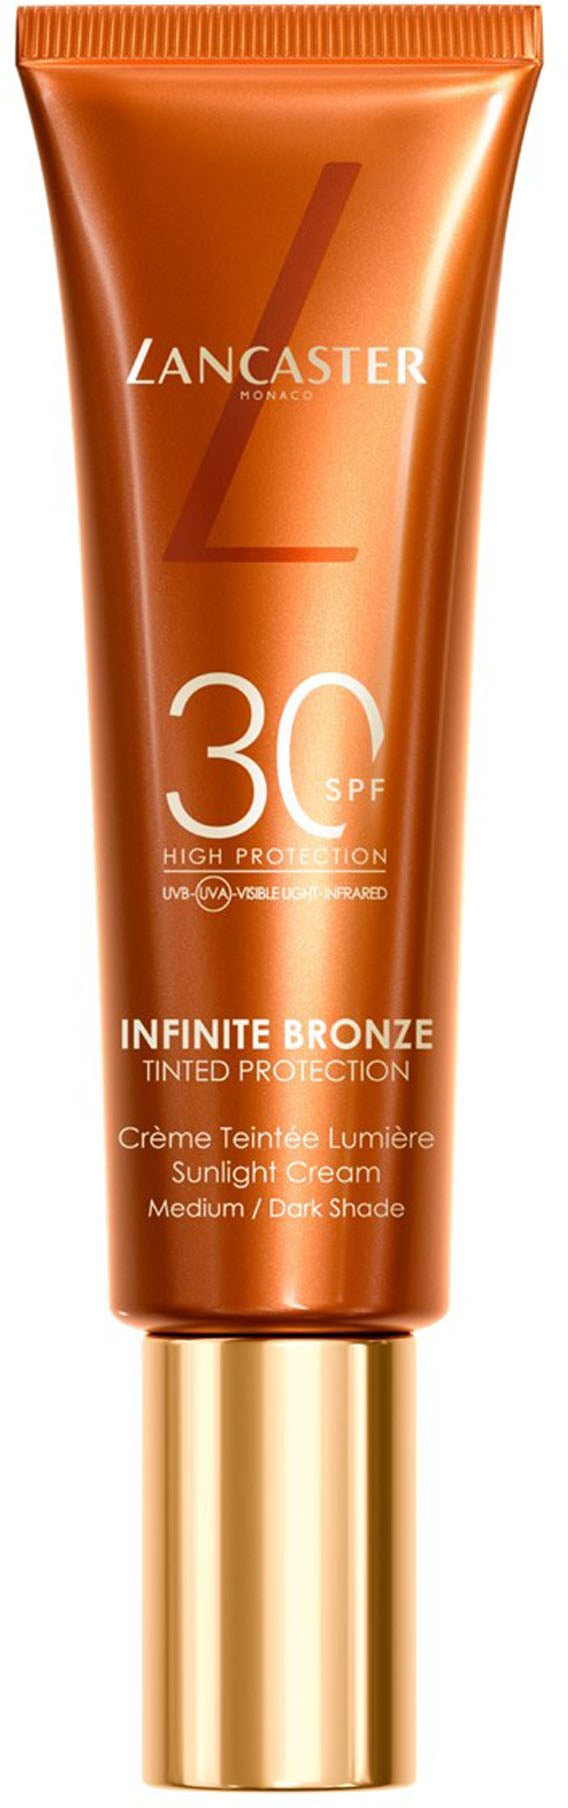 infinite bronze sunlight cream